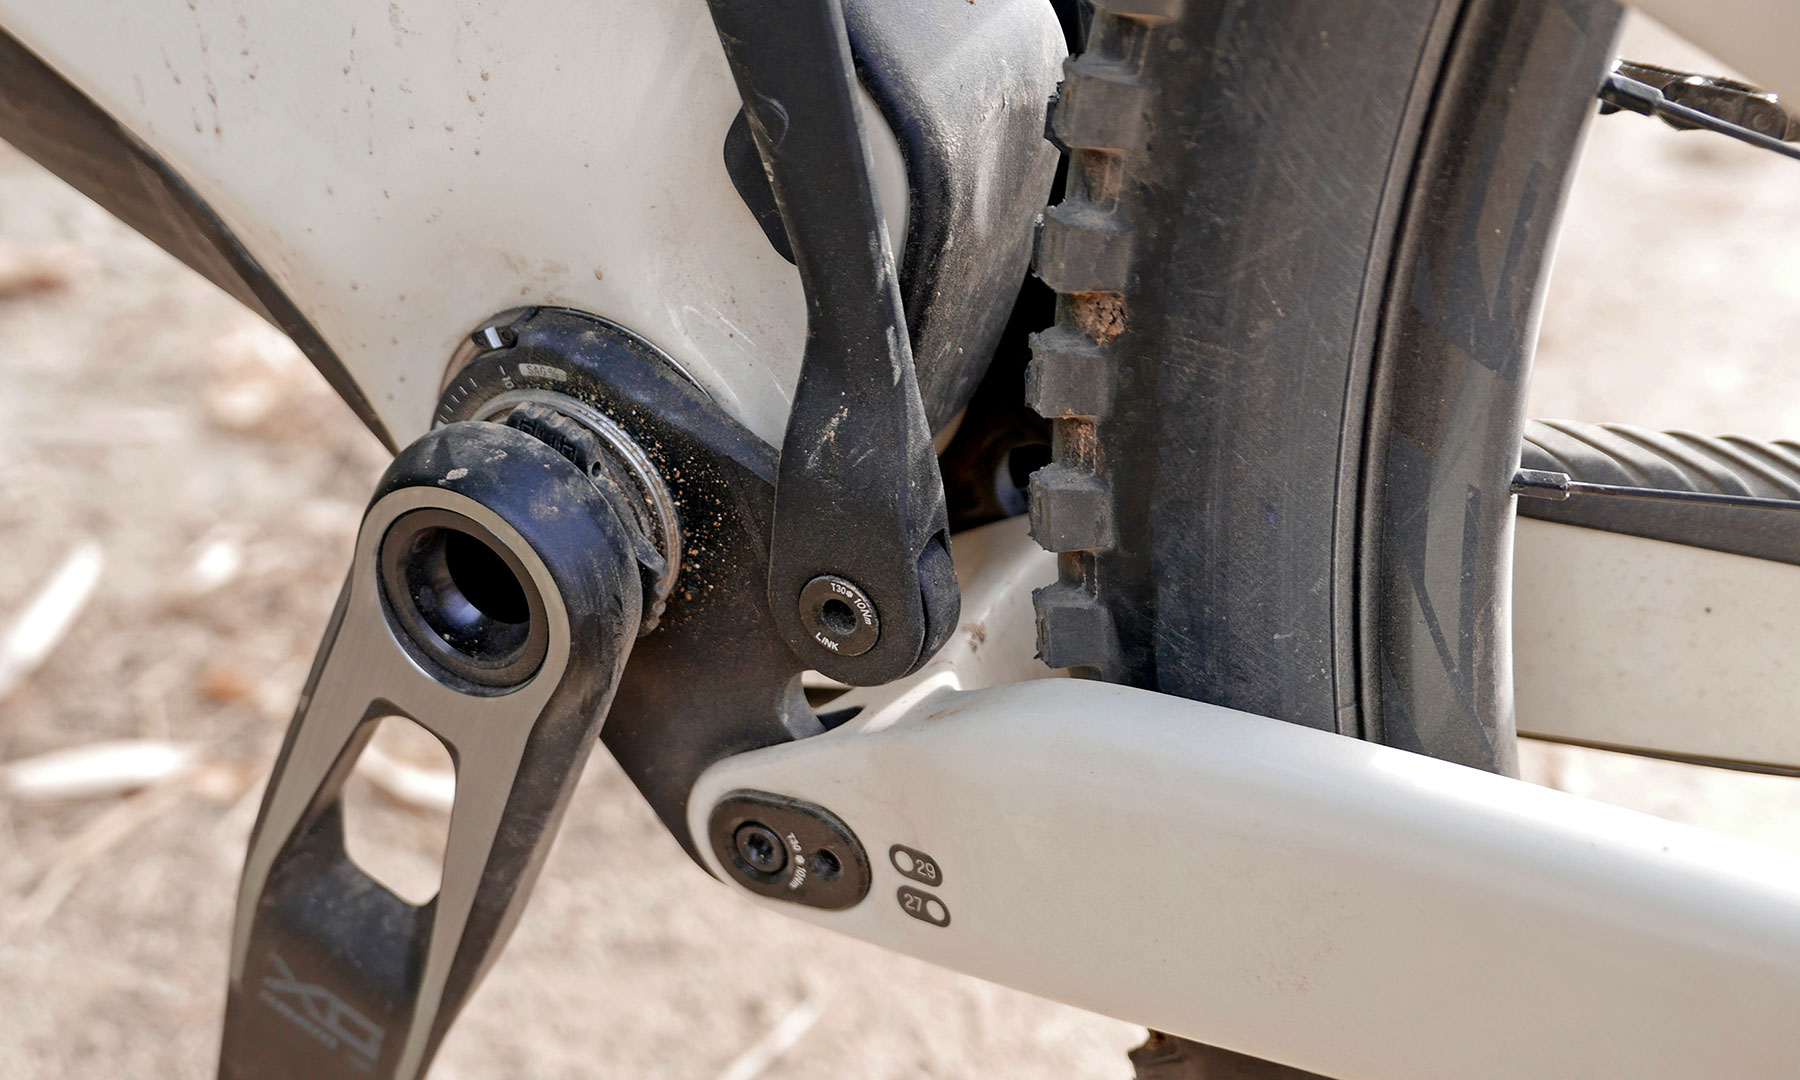 Scott Ransom 170mm 6-bar carbon freeride enduro mountain bike, mullet flip-chip & Sag-o-meter